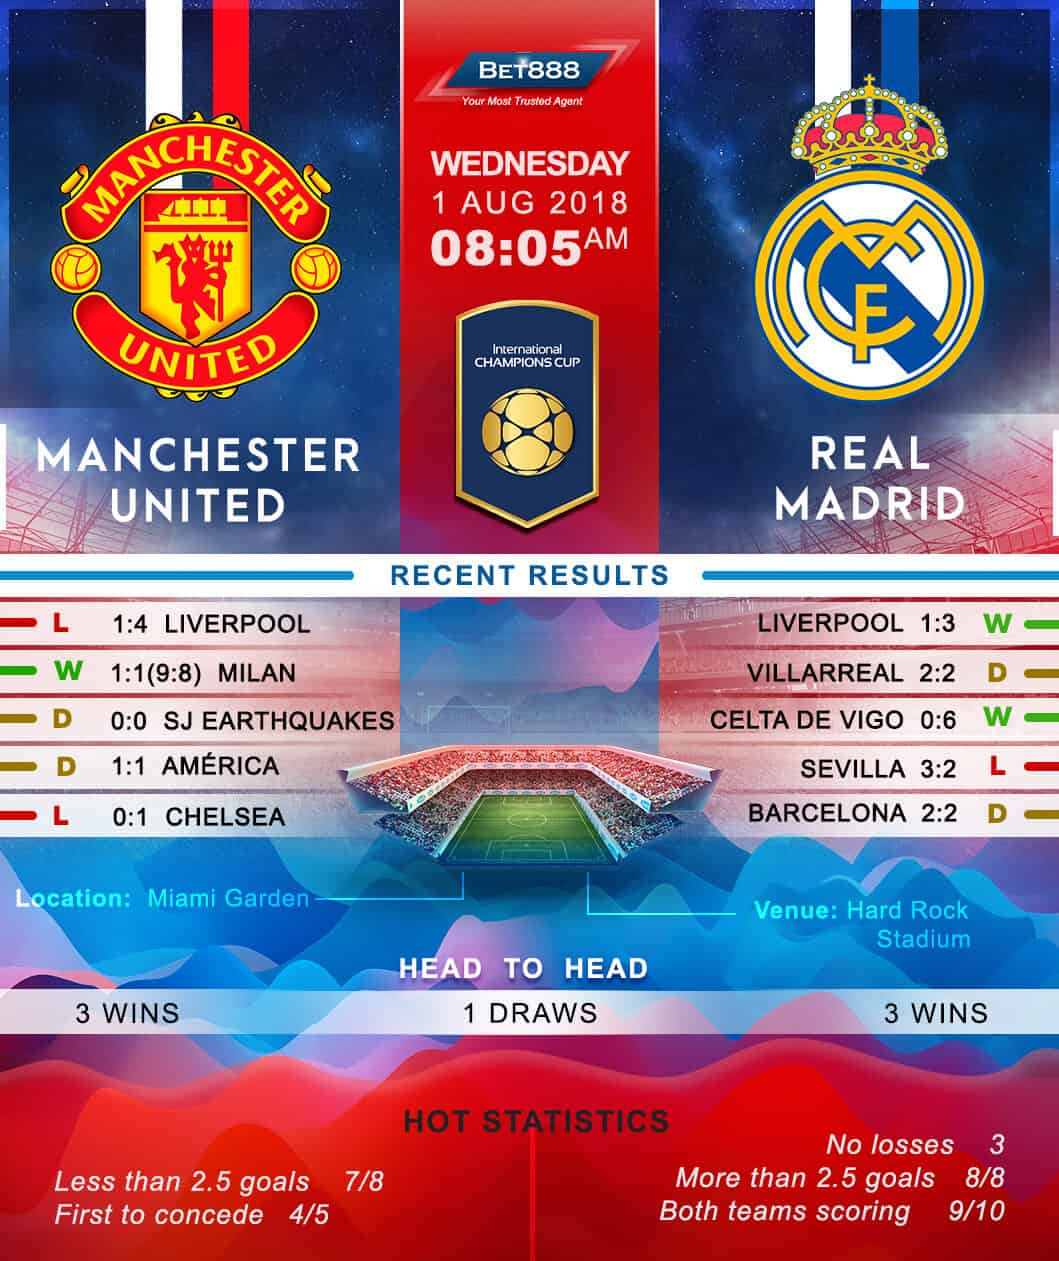 Manchester United vs Real Madrid 01/08/18